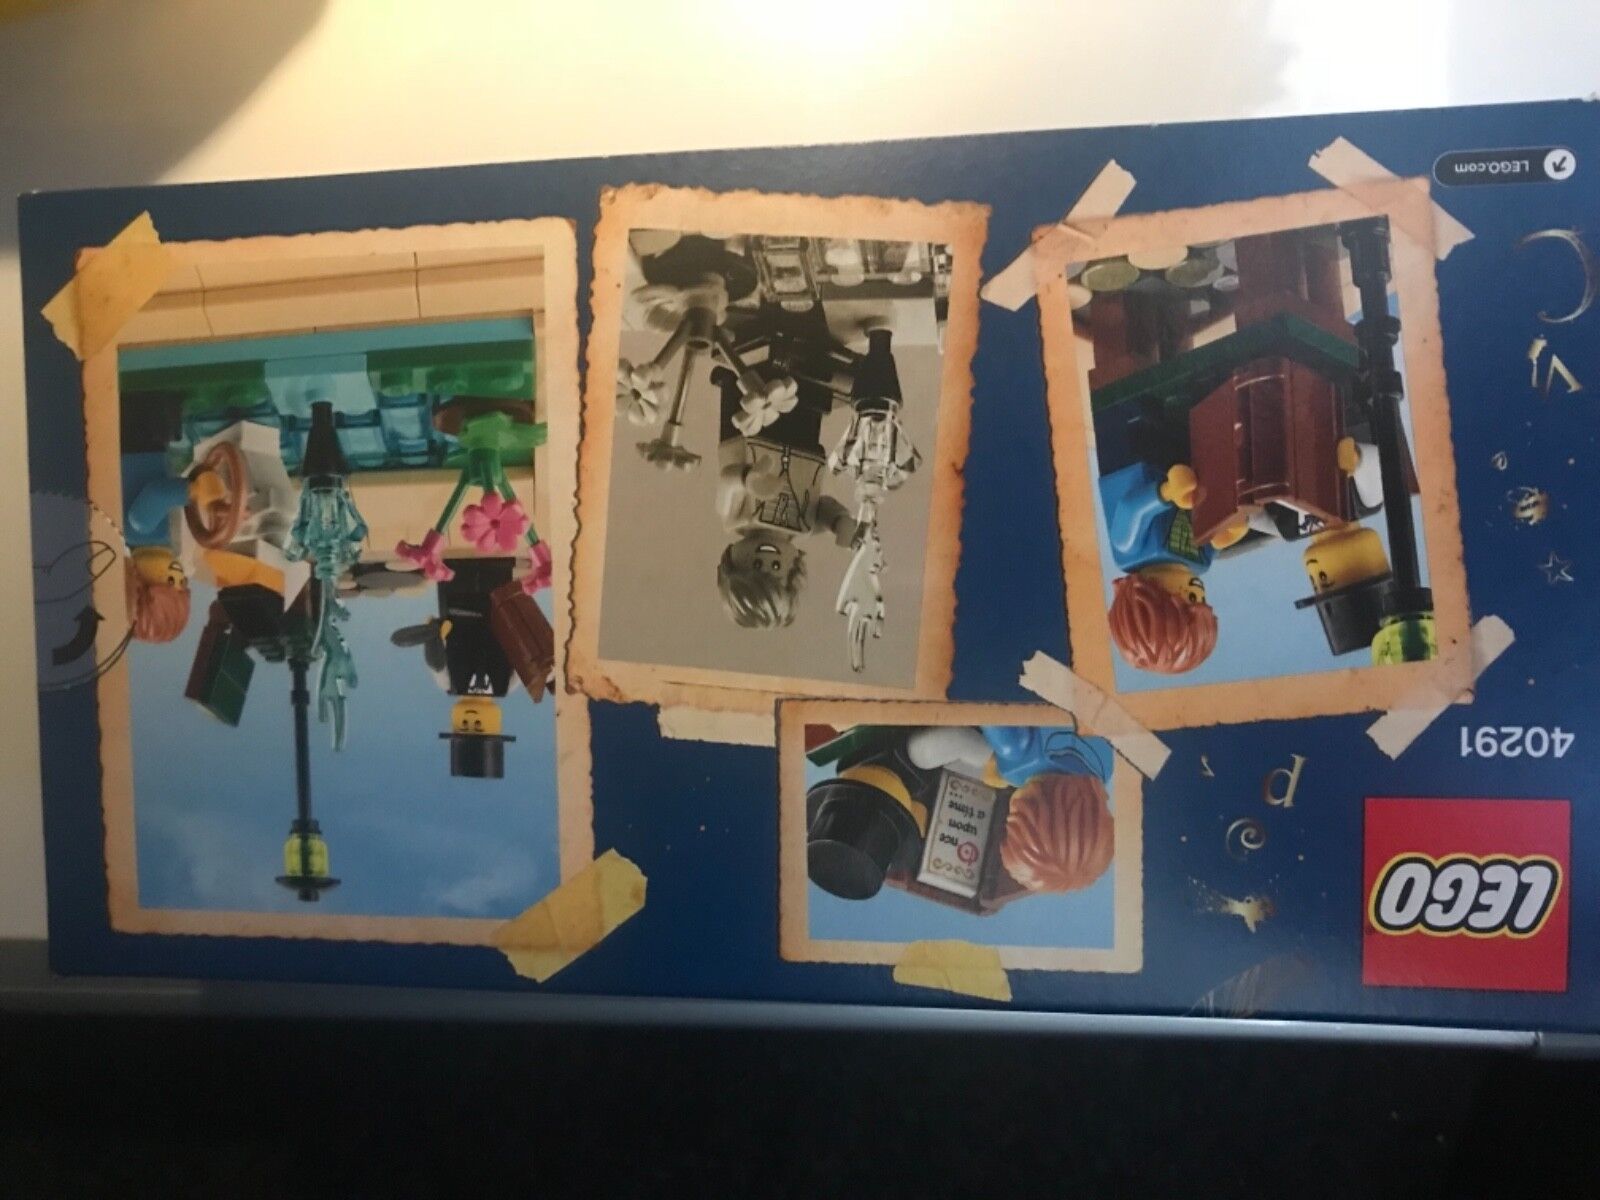 LEGO 40291 Creative Storybook Hans Christian Andersen